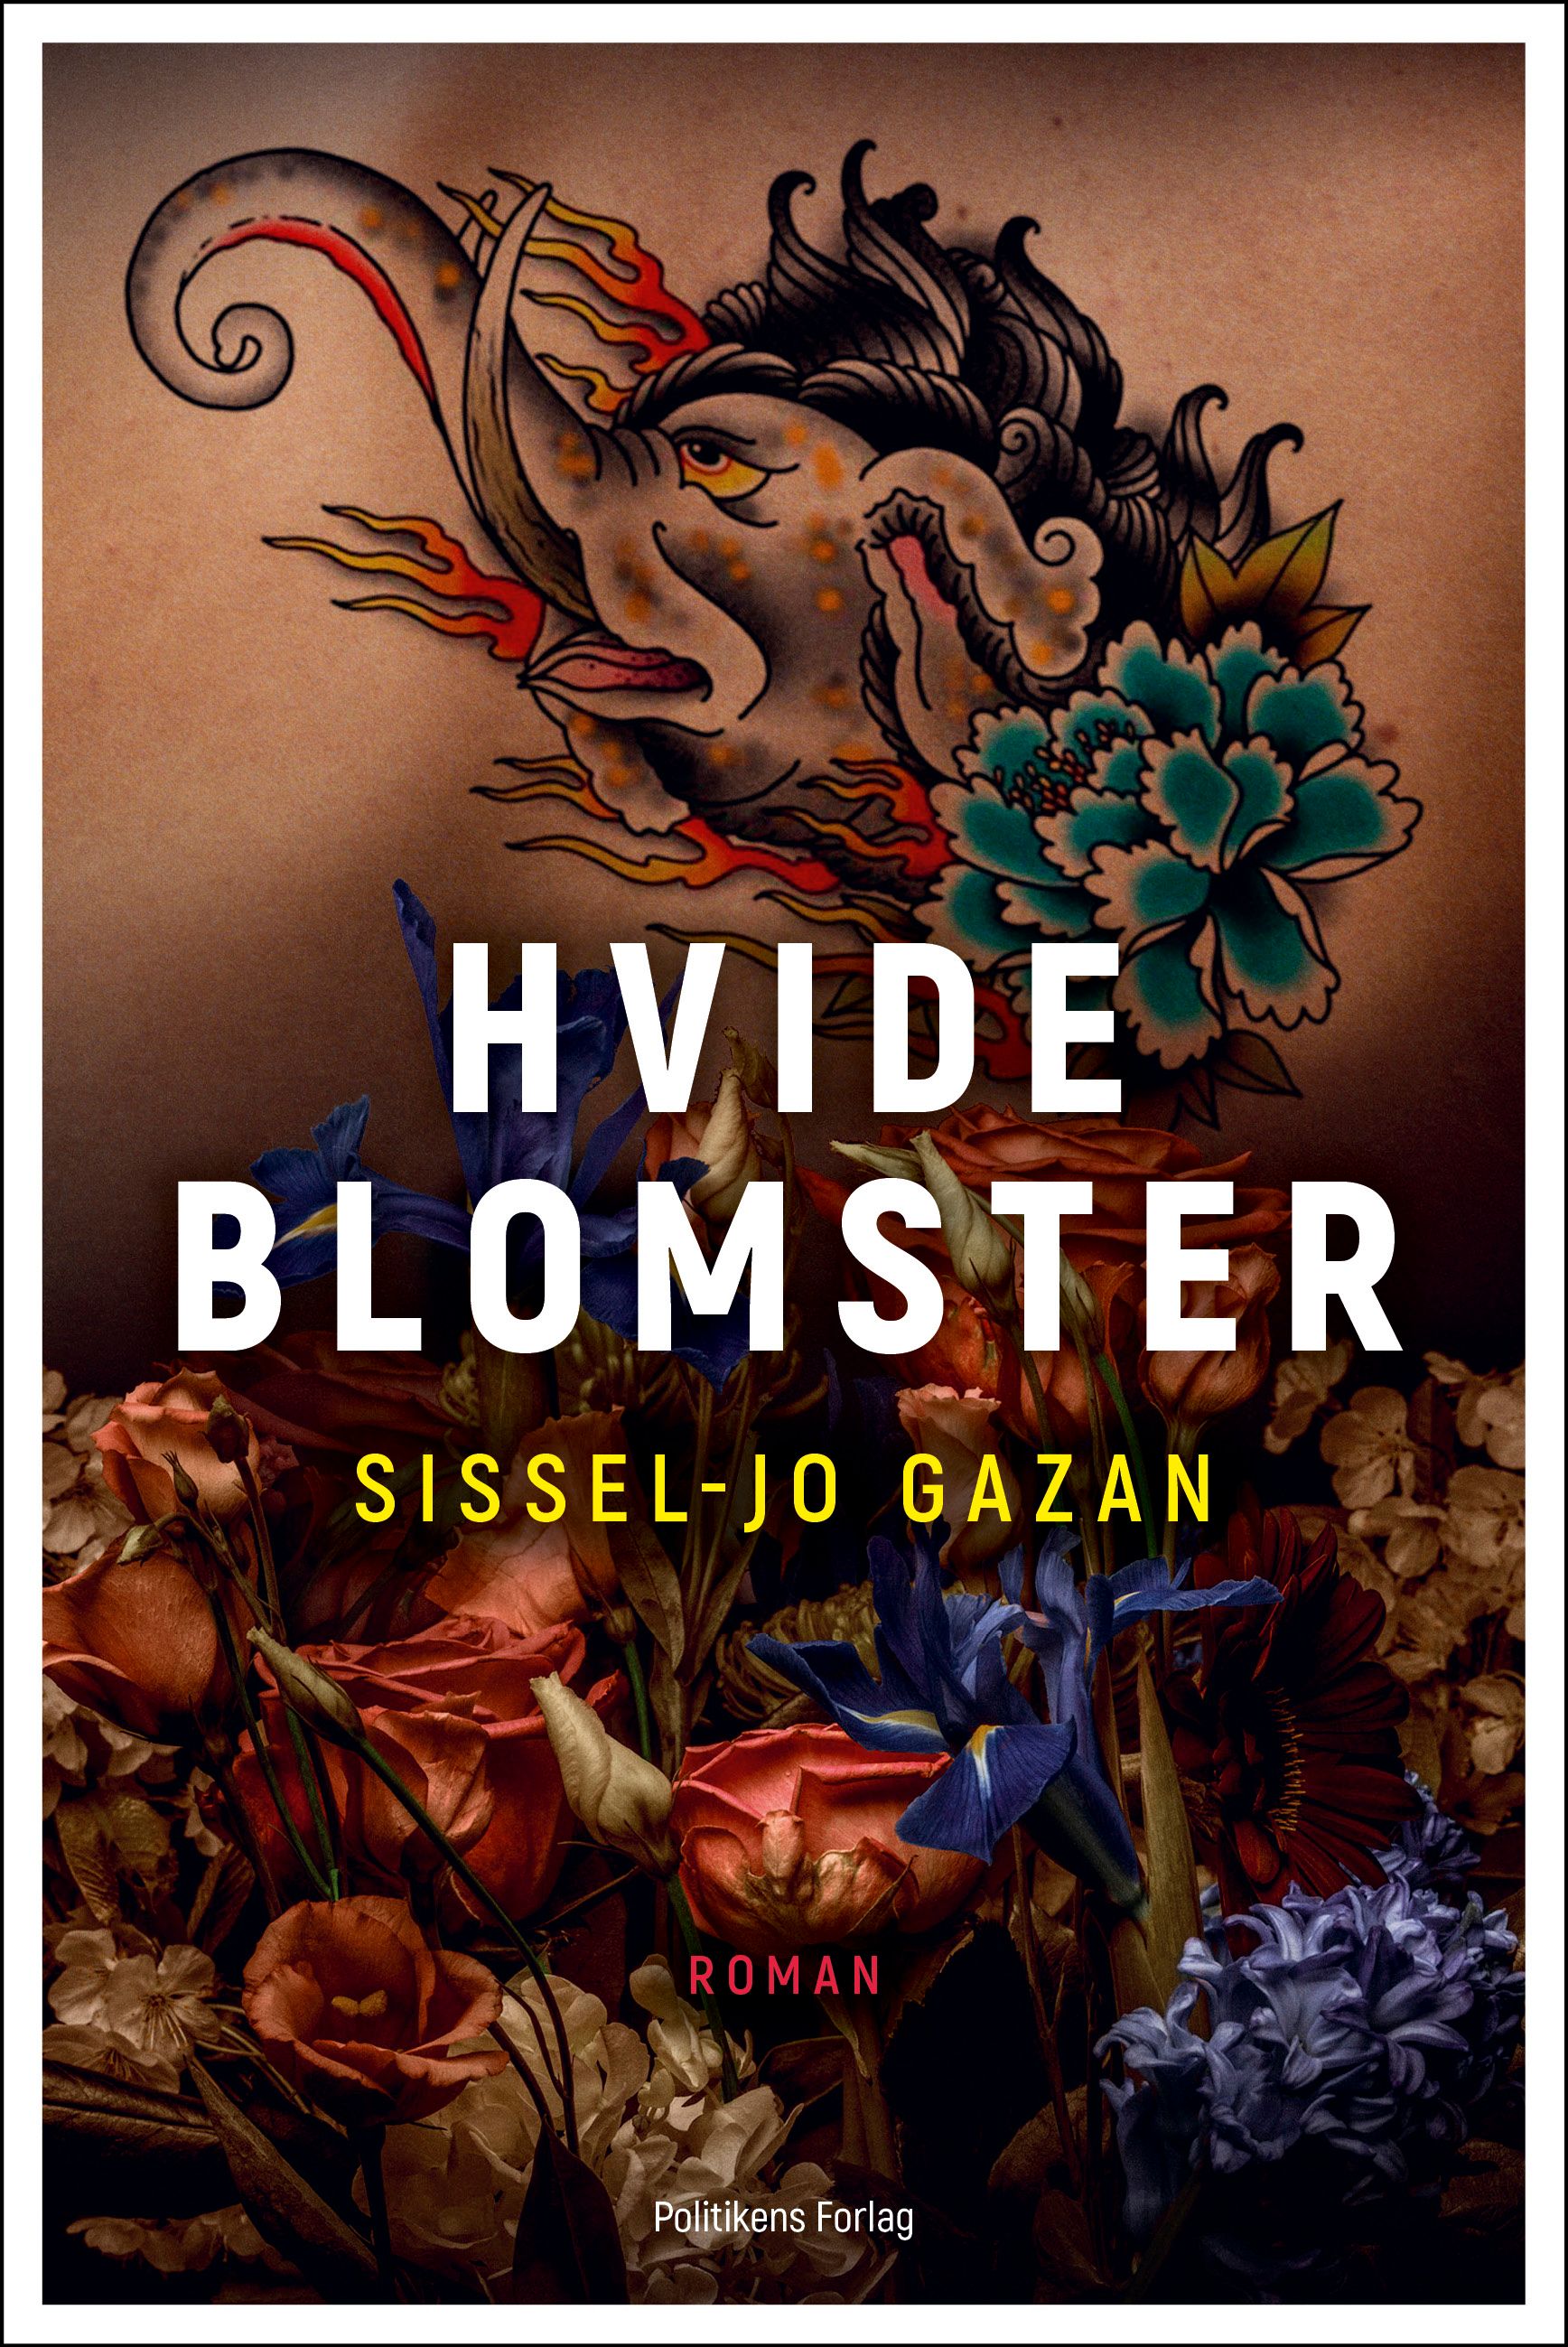 Hvide blomster, eBook by Sissel-Jo Gazan